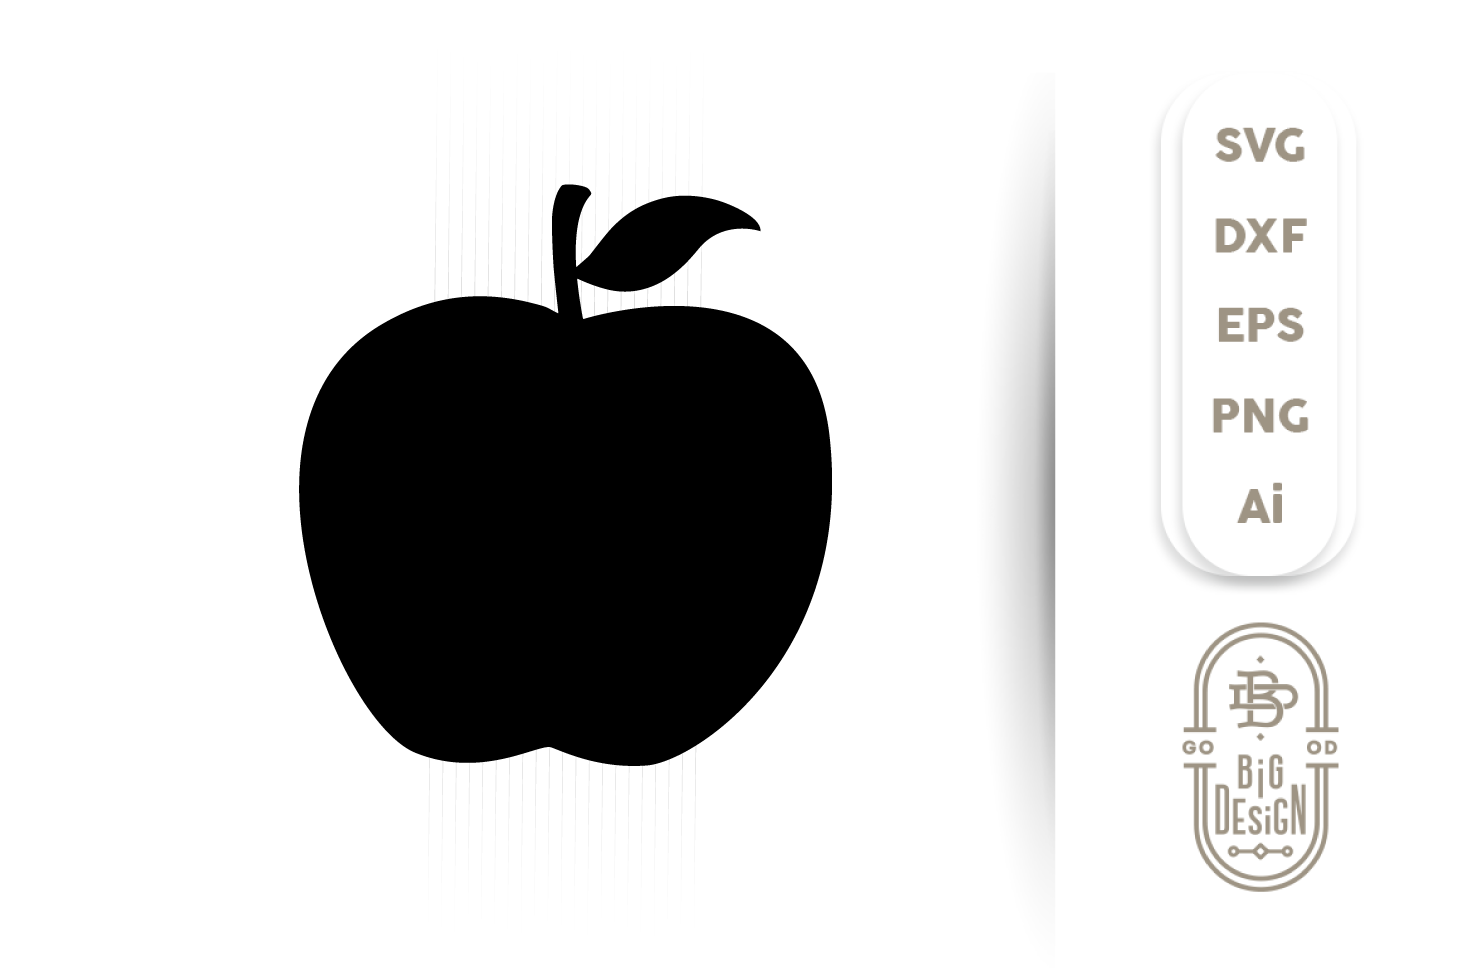 Download Apple SVG Cut File - Apple silhouette